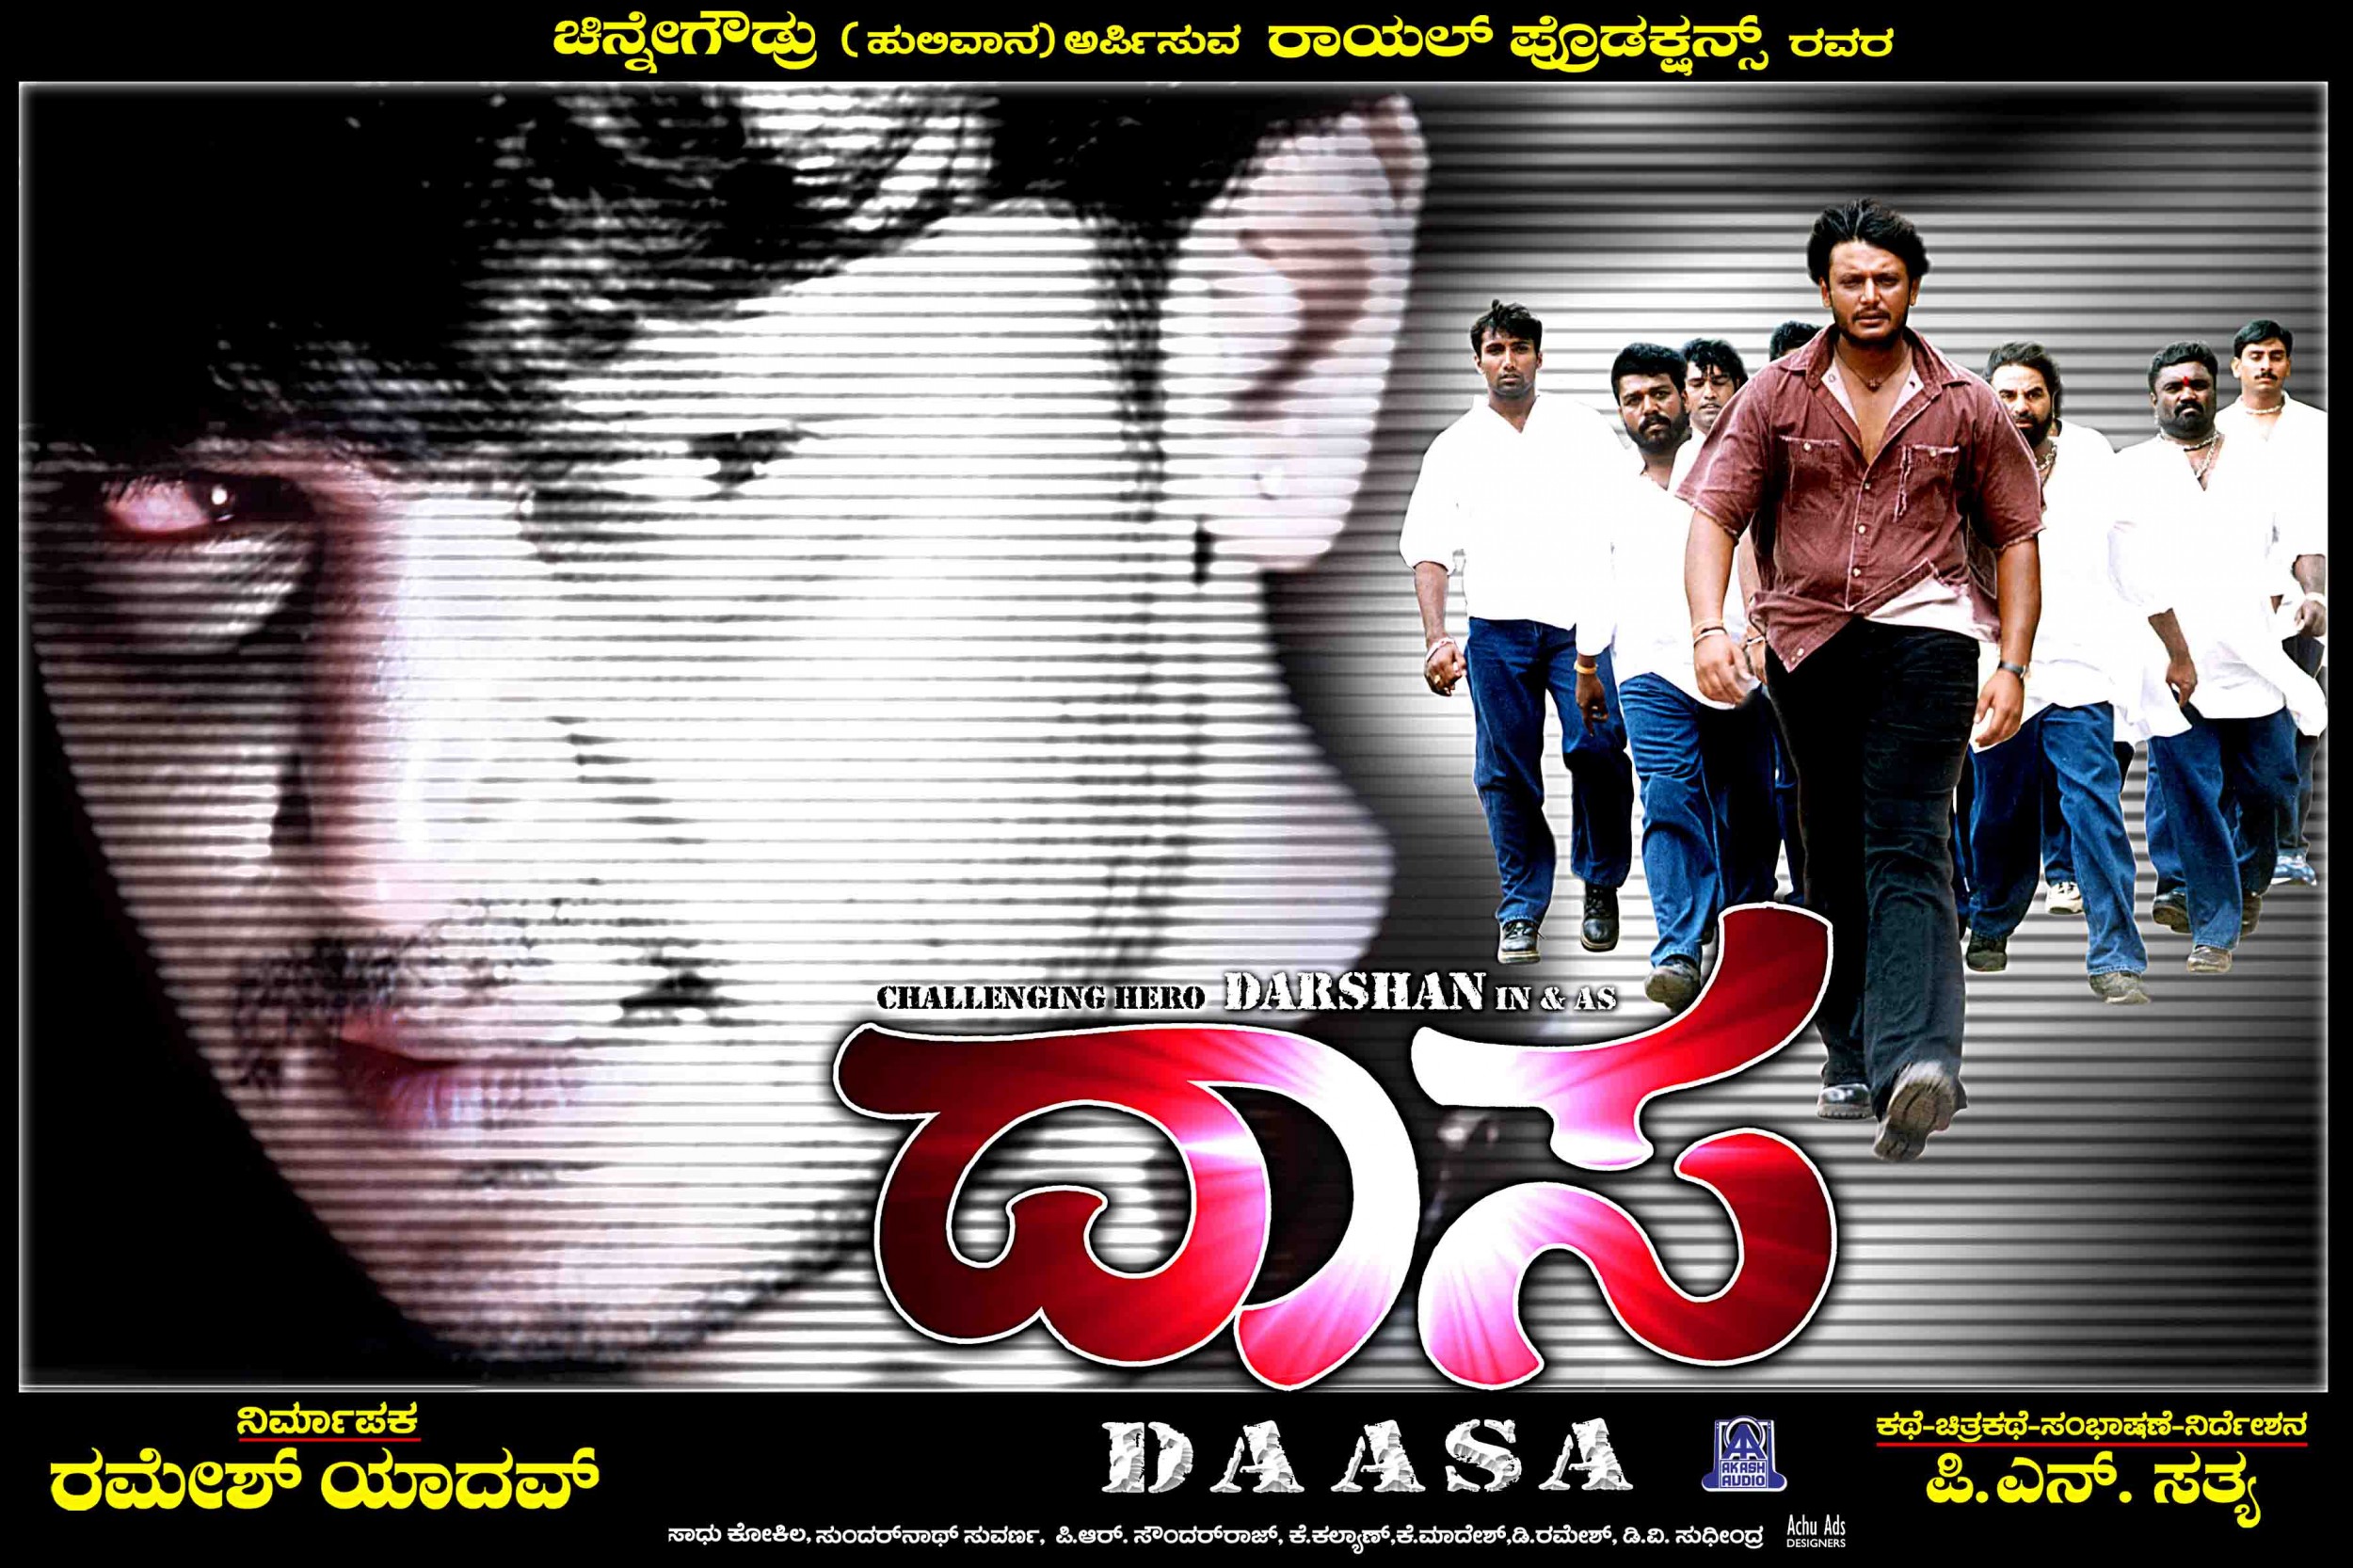 Mega Sized Movie Poster Image for Daasa (#3 of 3)